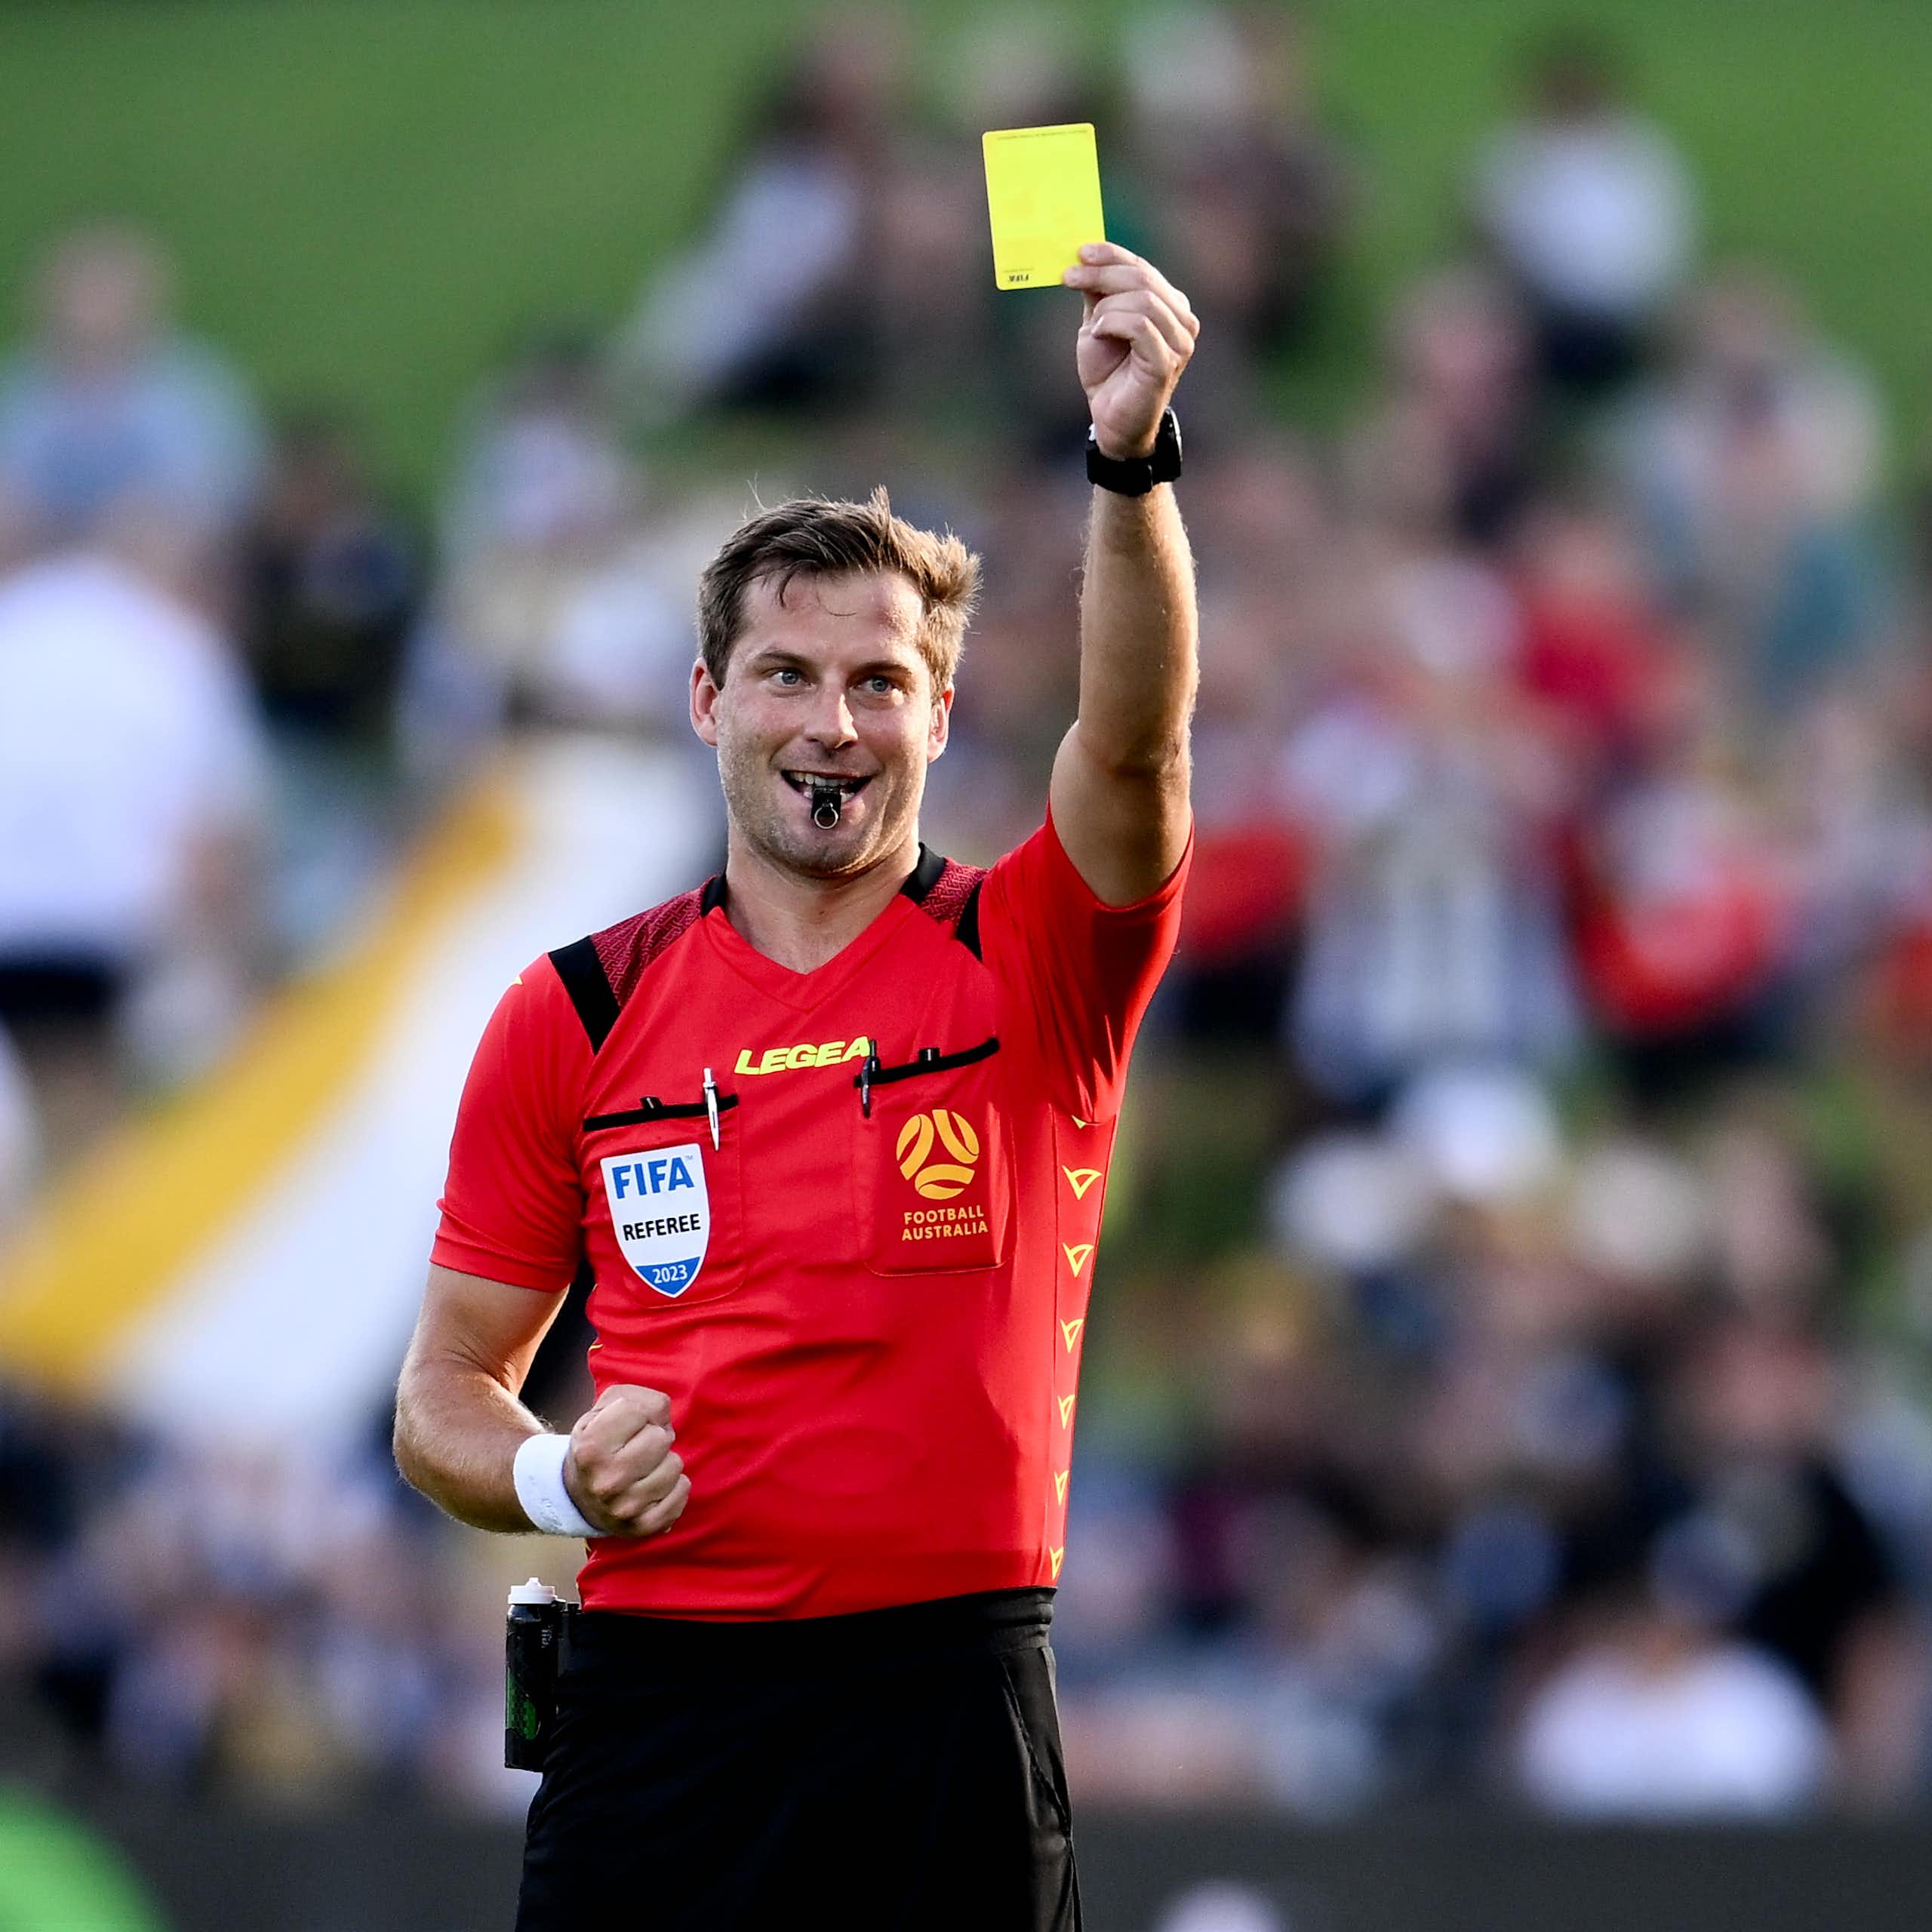 An A-League soccer referee holds aloft a yellow card